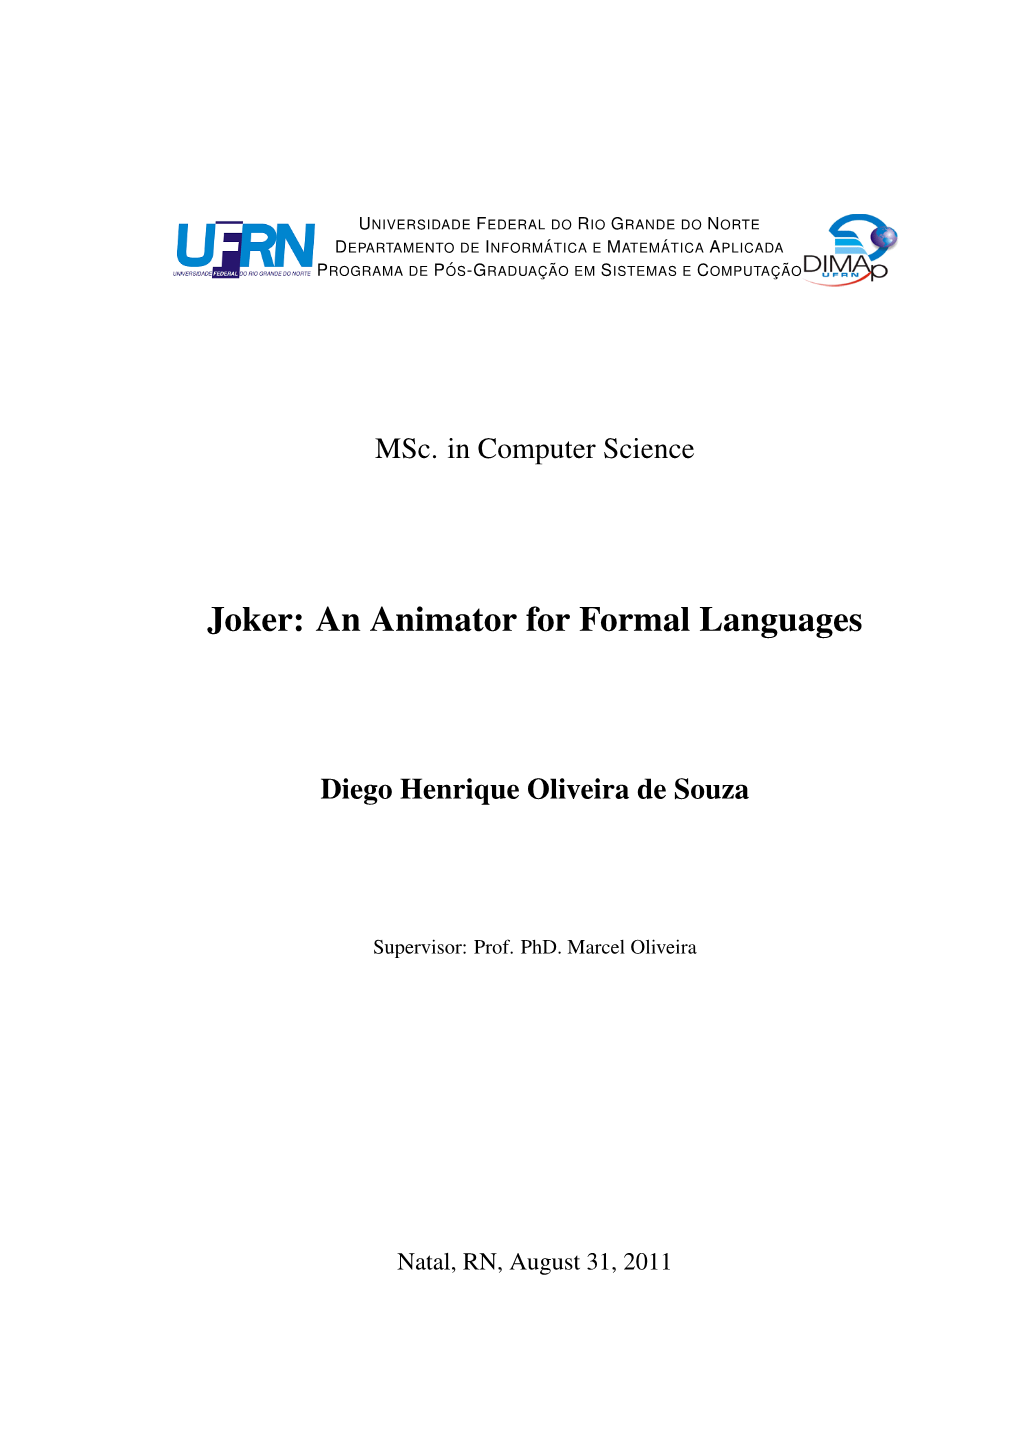 Joker: an Animator for Formal Languages